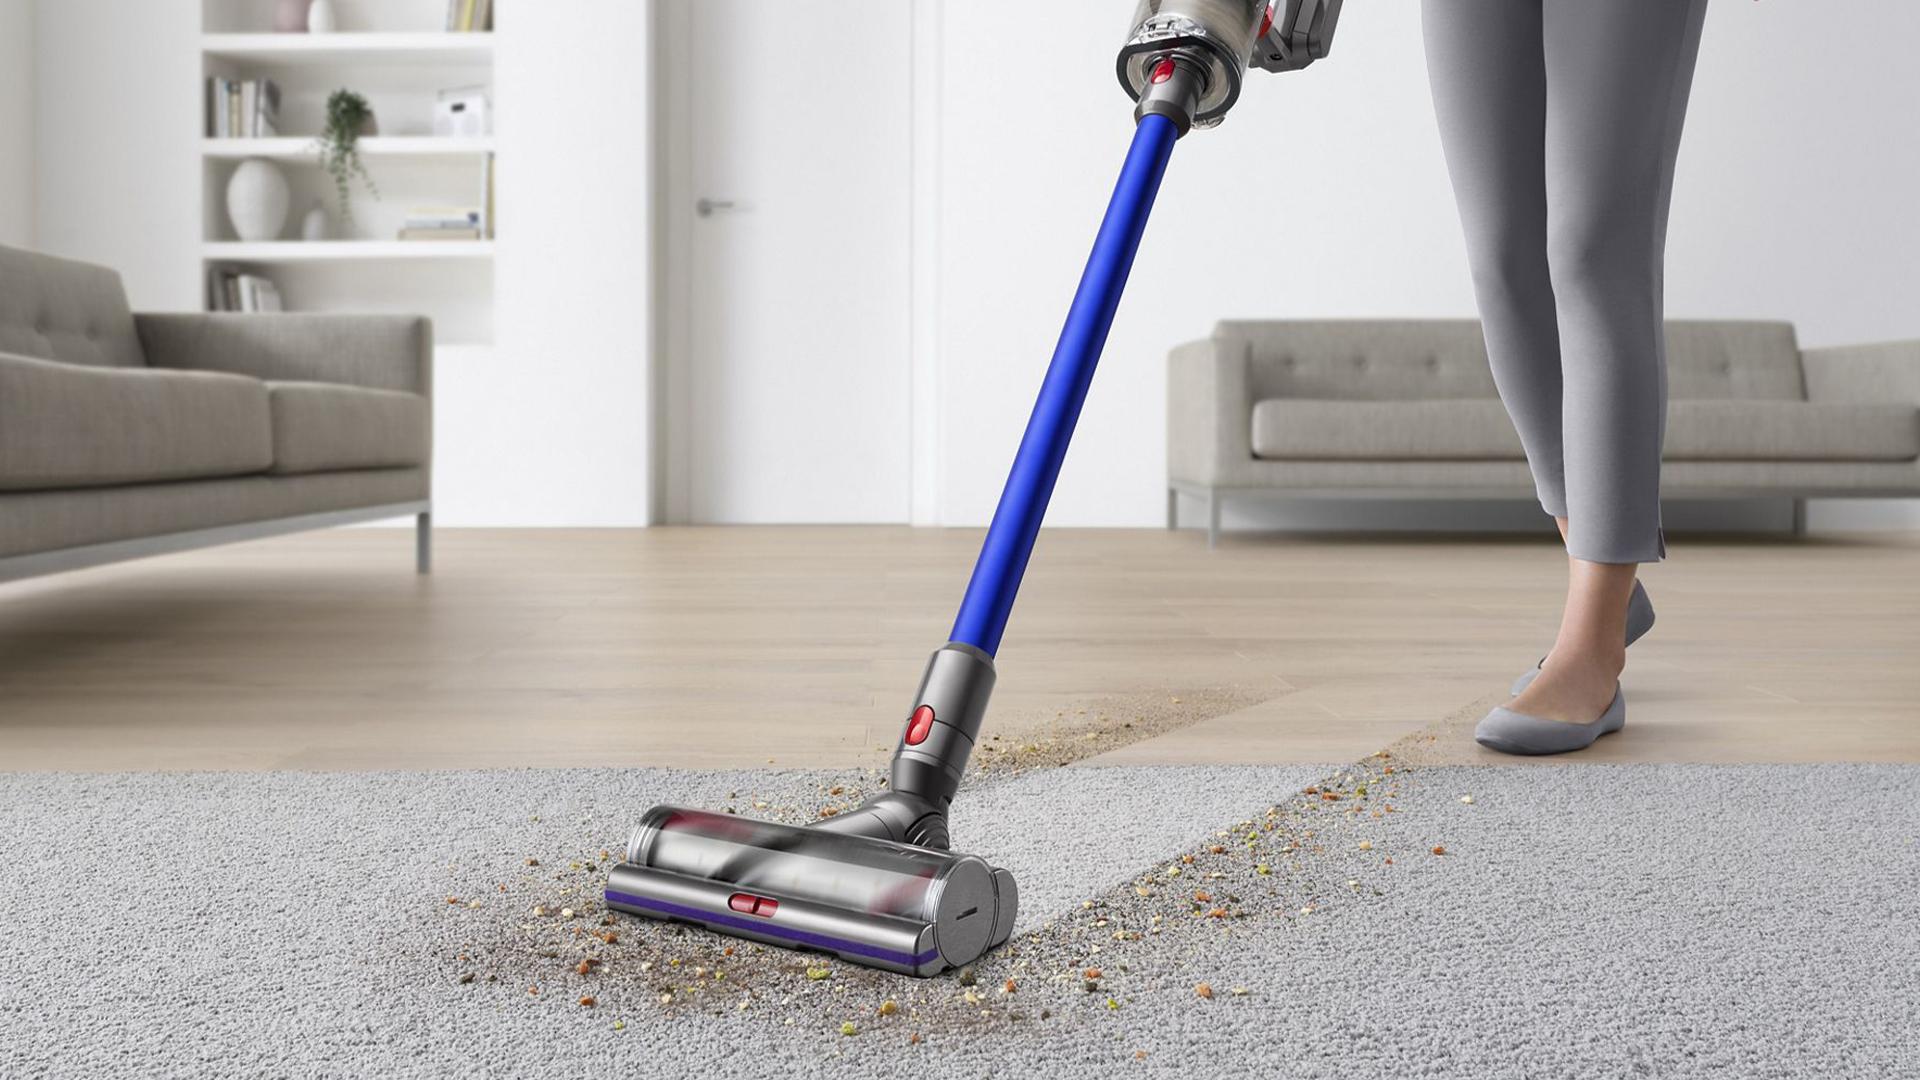 Dyson cordless vacuum cleaner on carpet